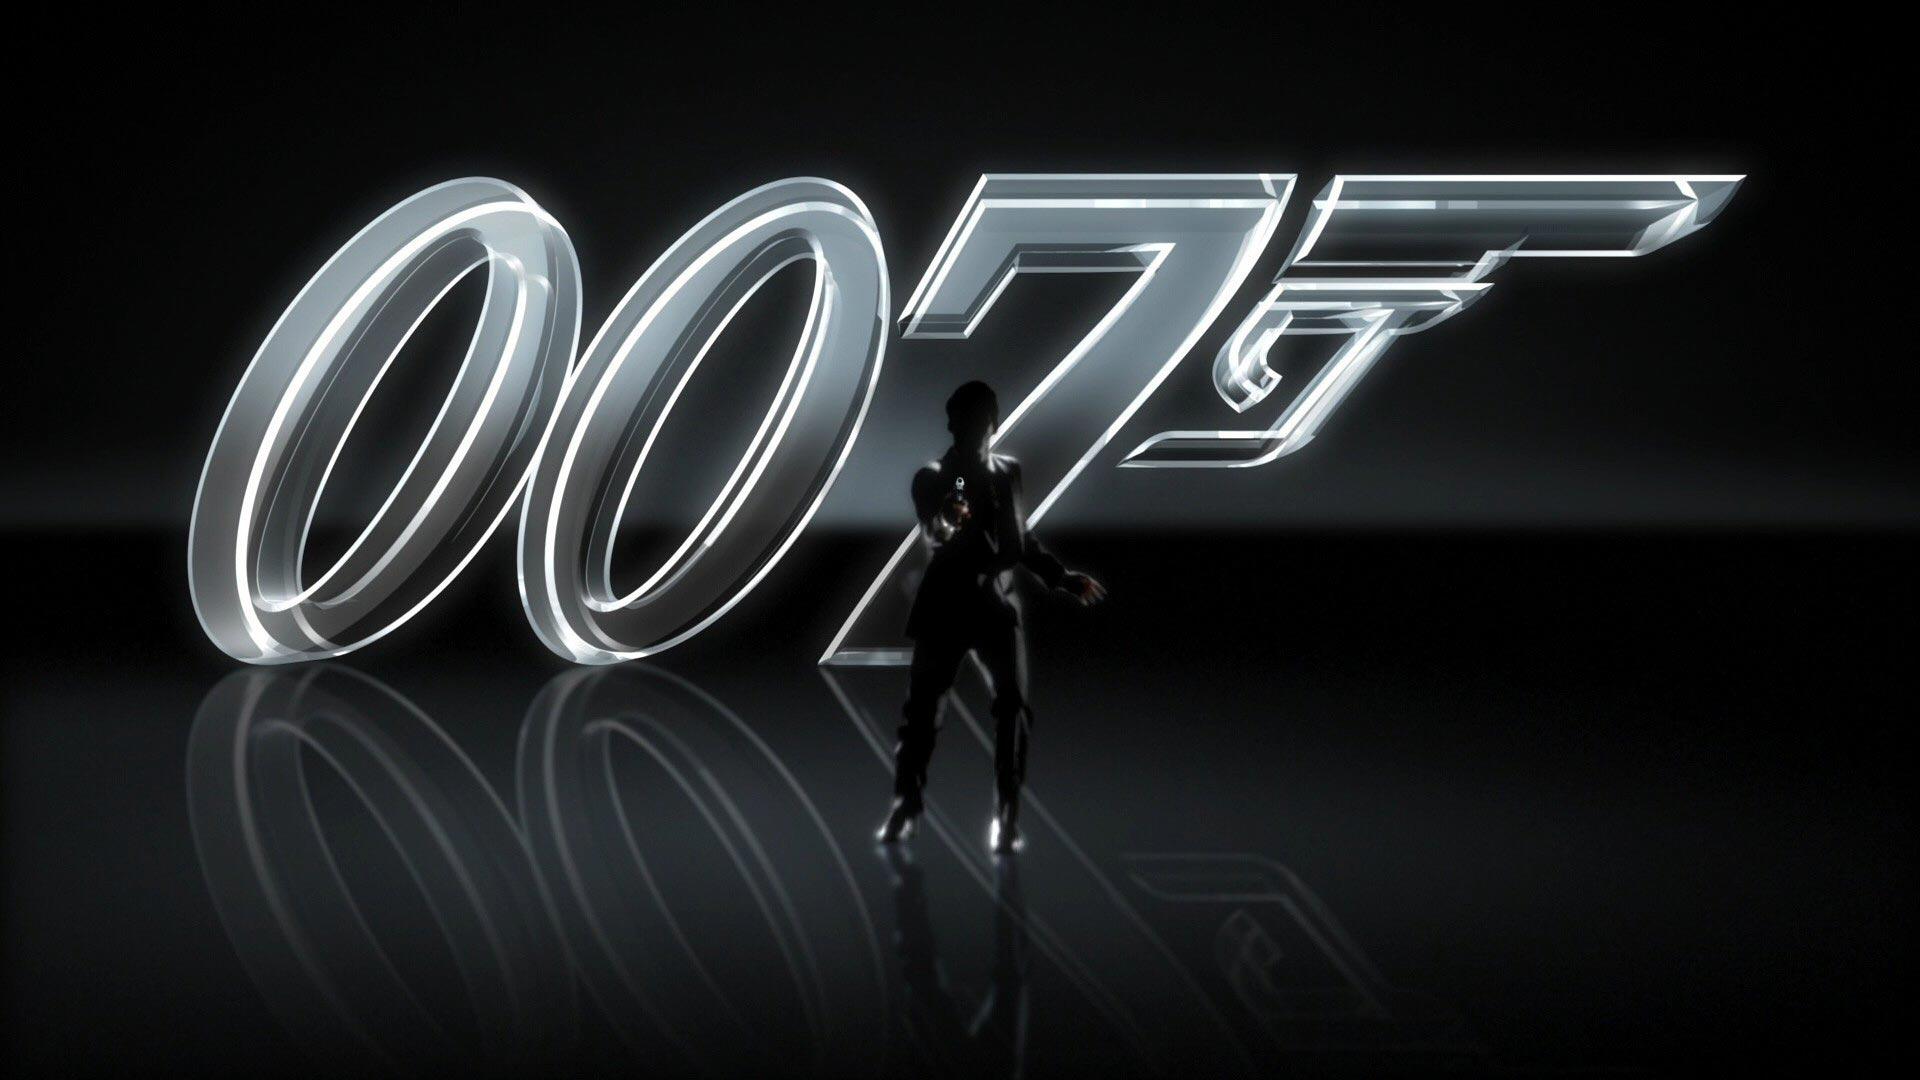 James Bond 3D 007 Wallpaper